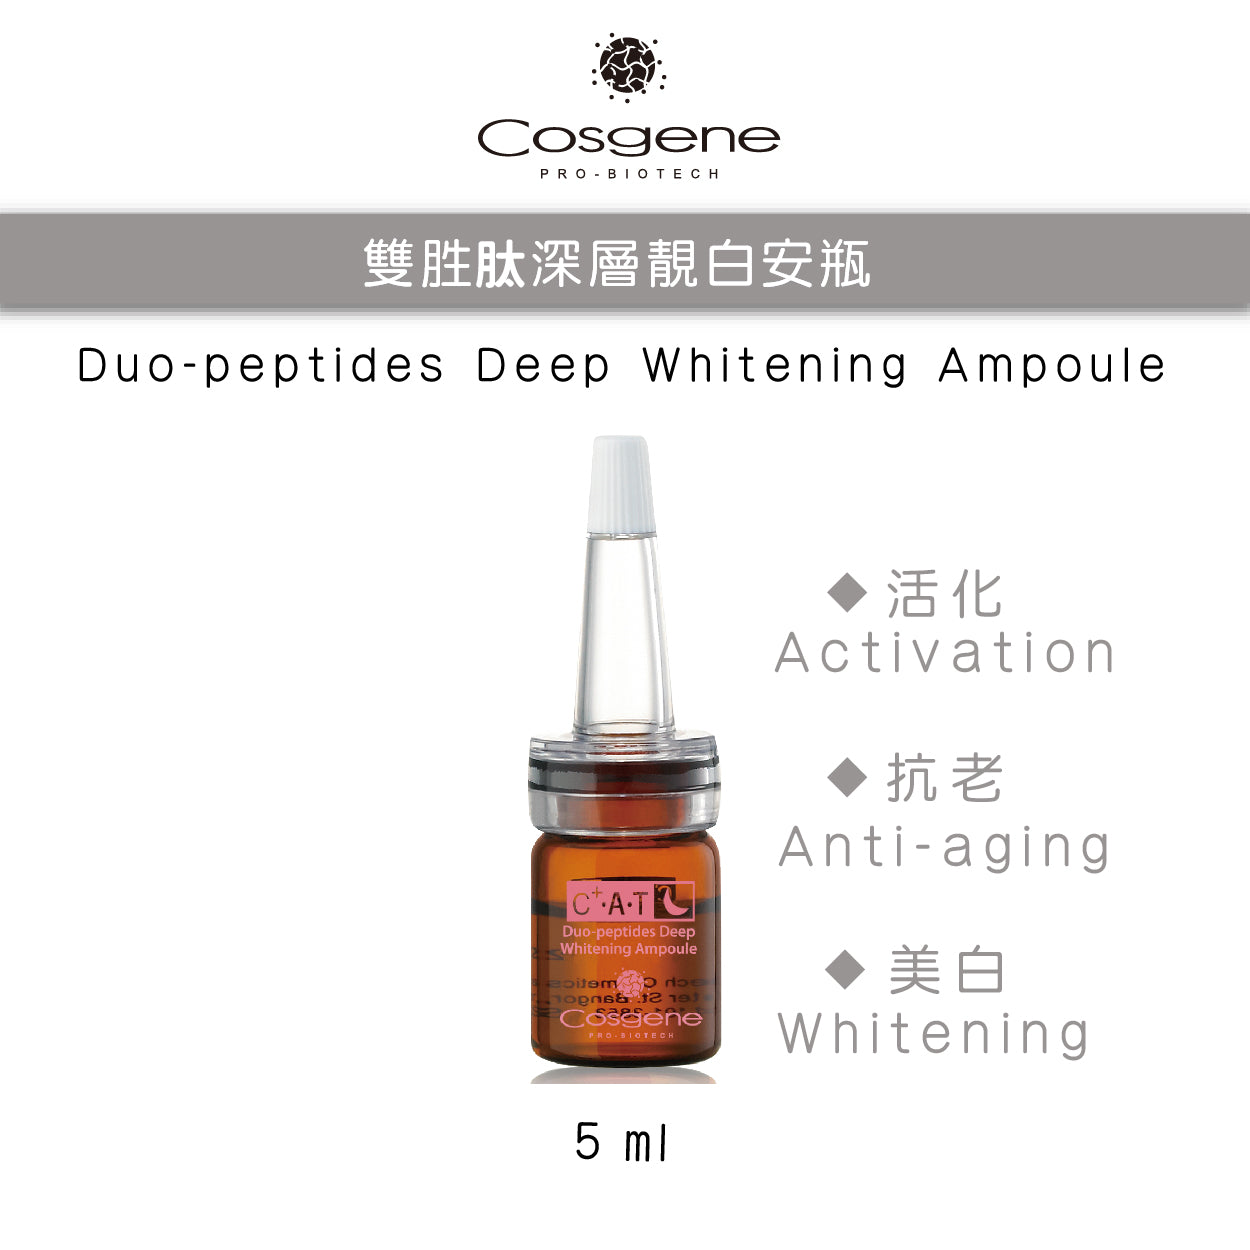 【COSGENE】Dual-peptides Deep Whitening Ampoule 5ml x 6 Duo-peptides Deep Whitening Ampoule